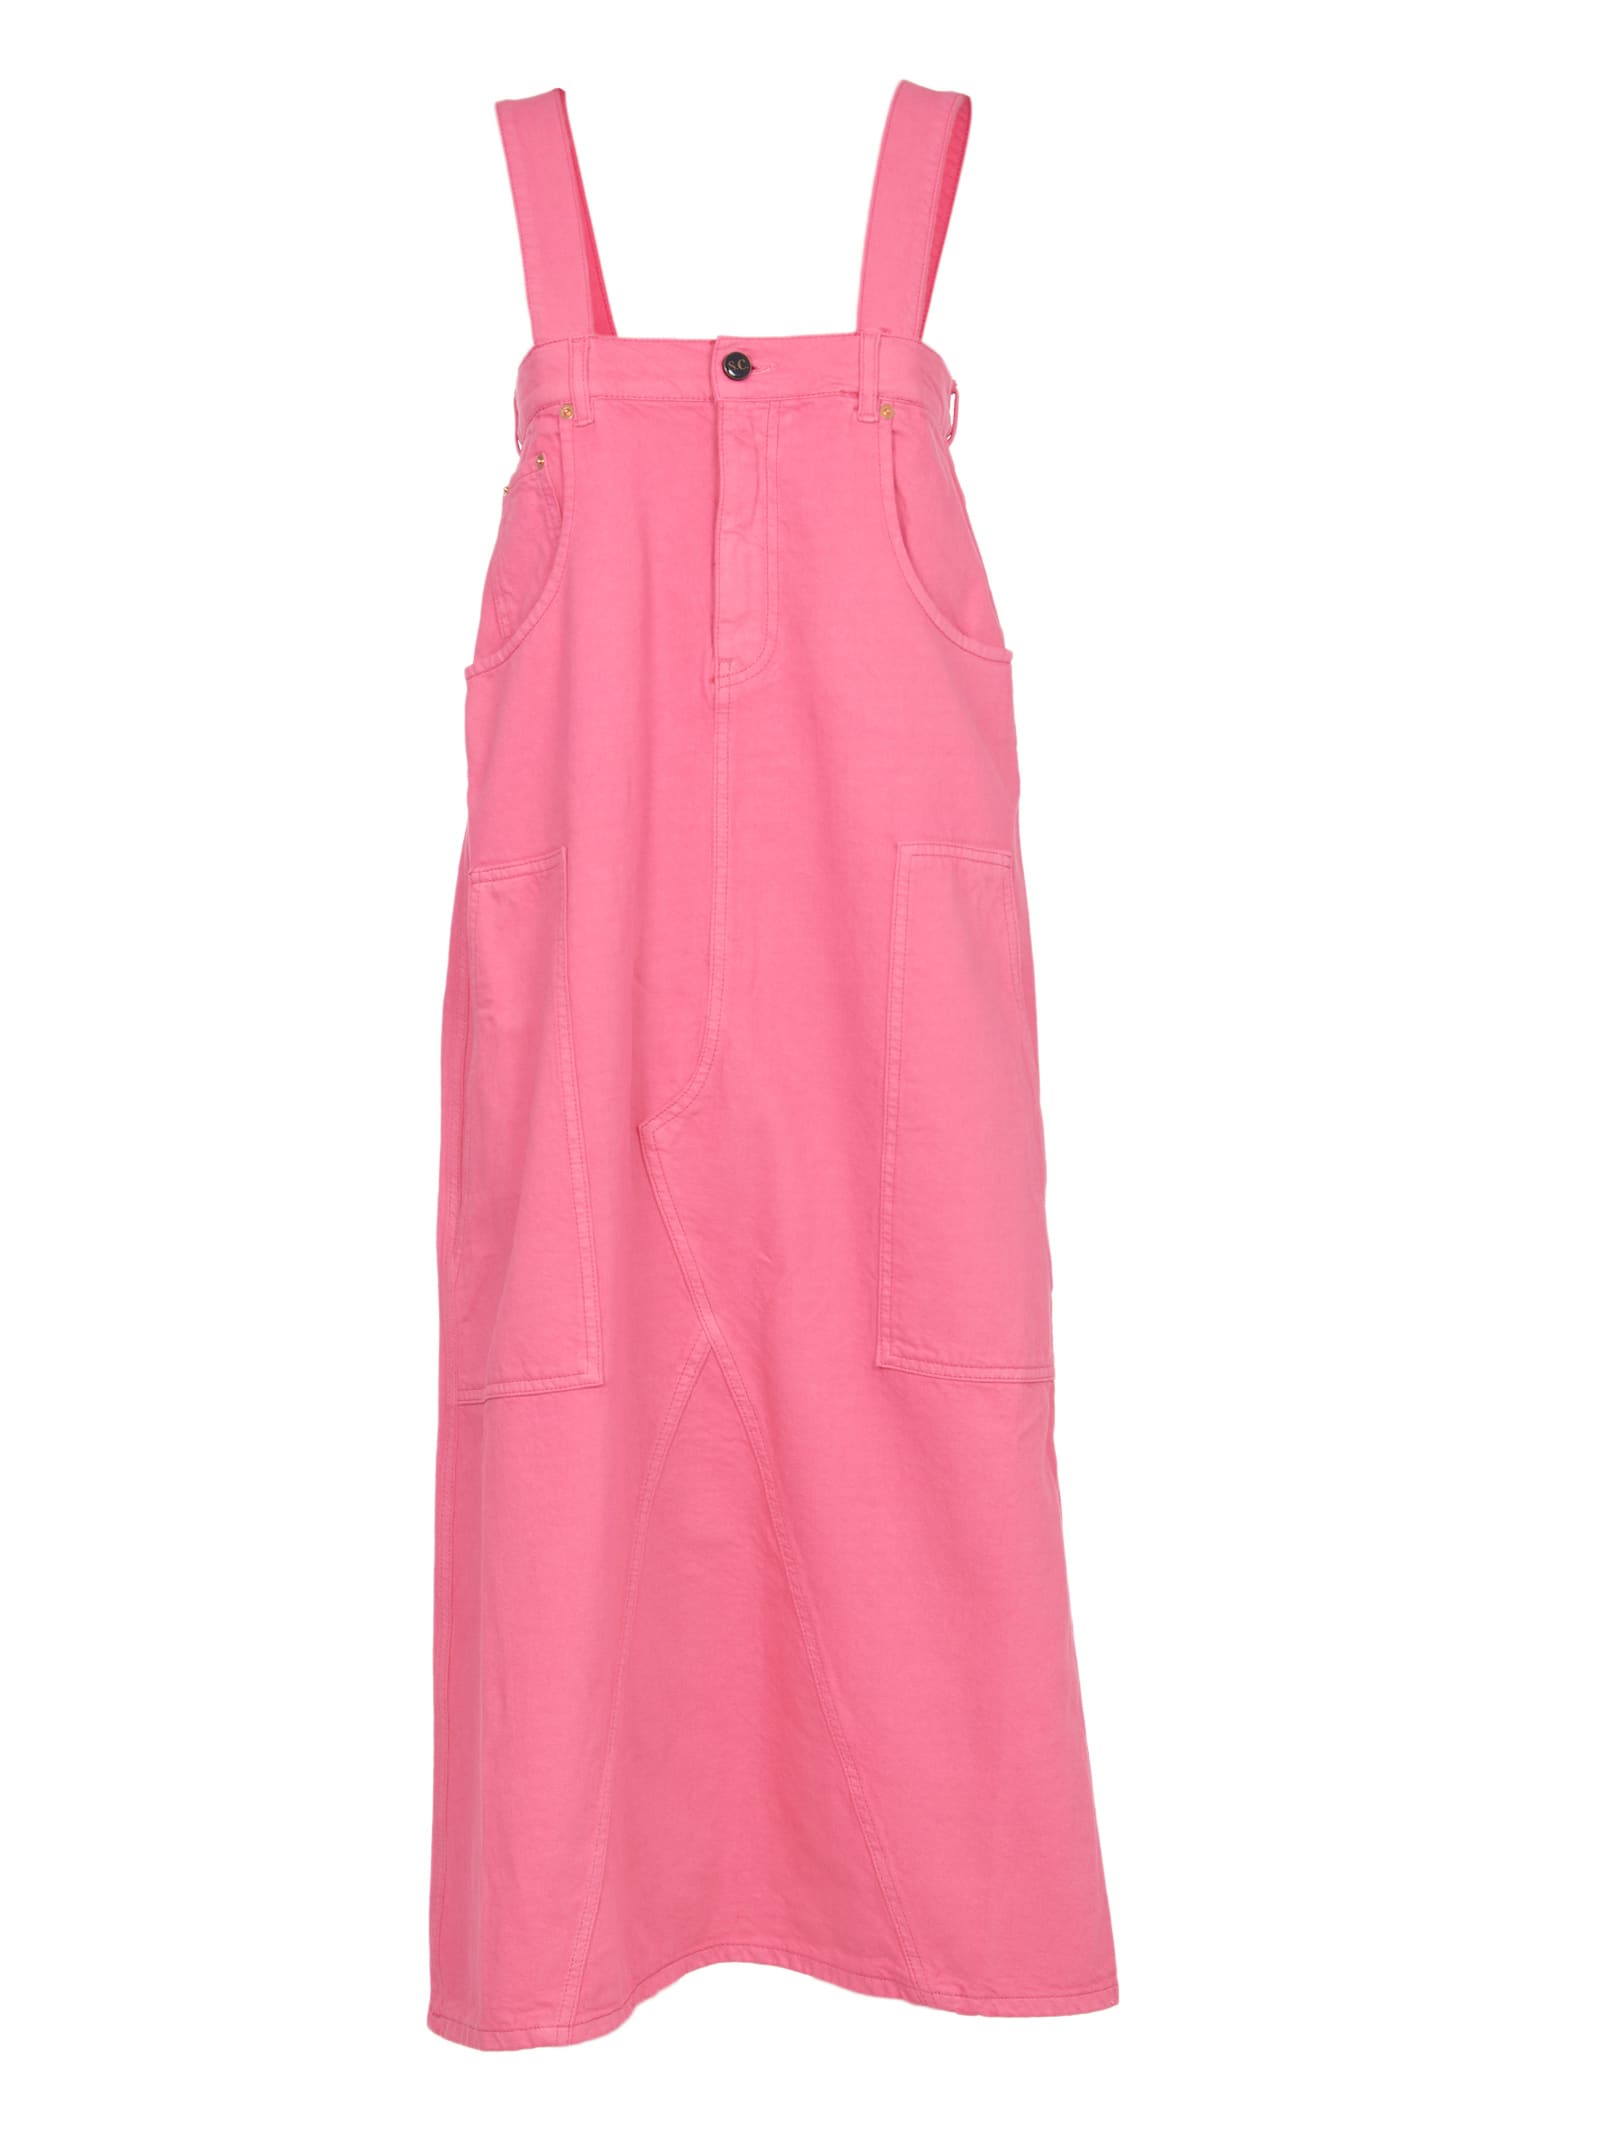 SEMICOUTURE Pink Denim Dress